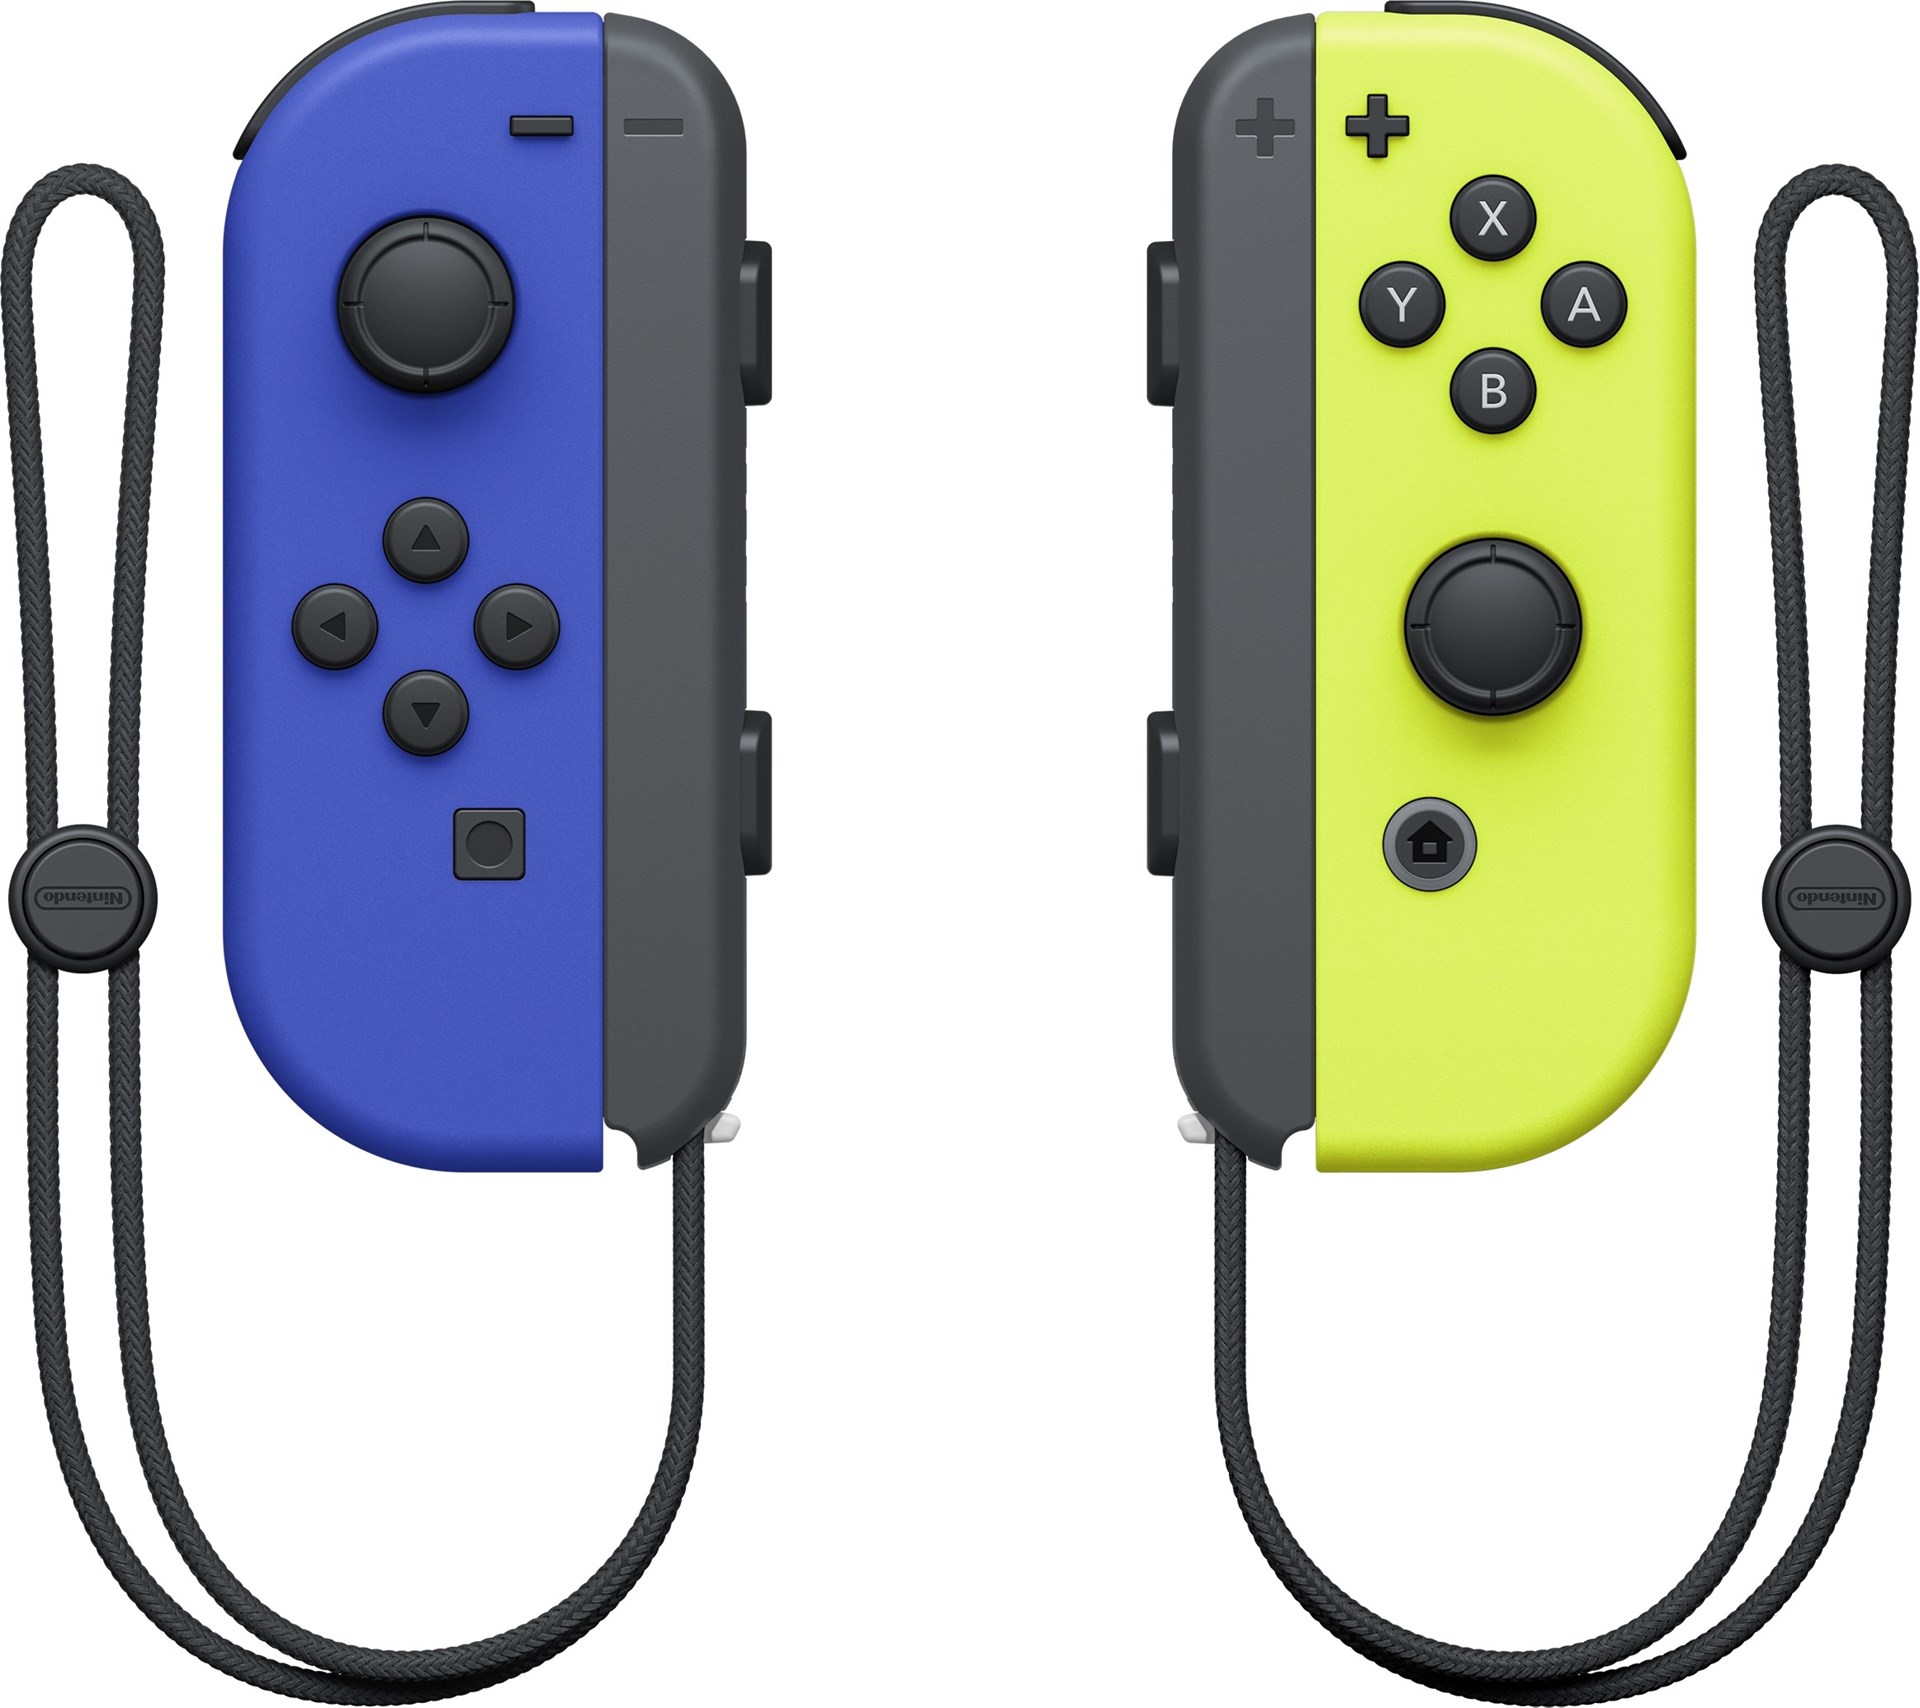 Nintendo Switch Joy-Con Pair Blue, Neon Yellow